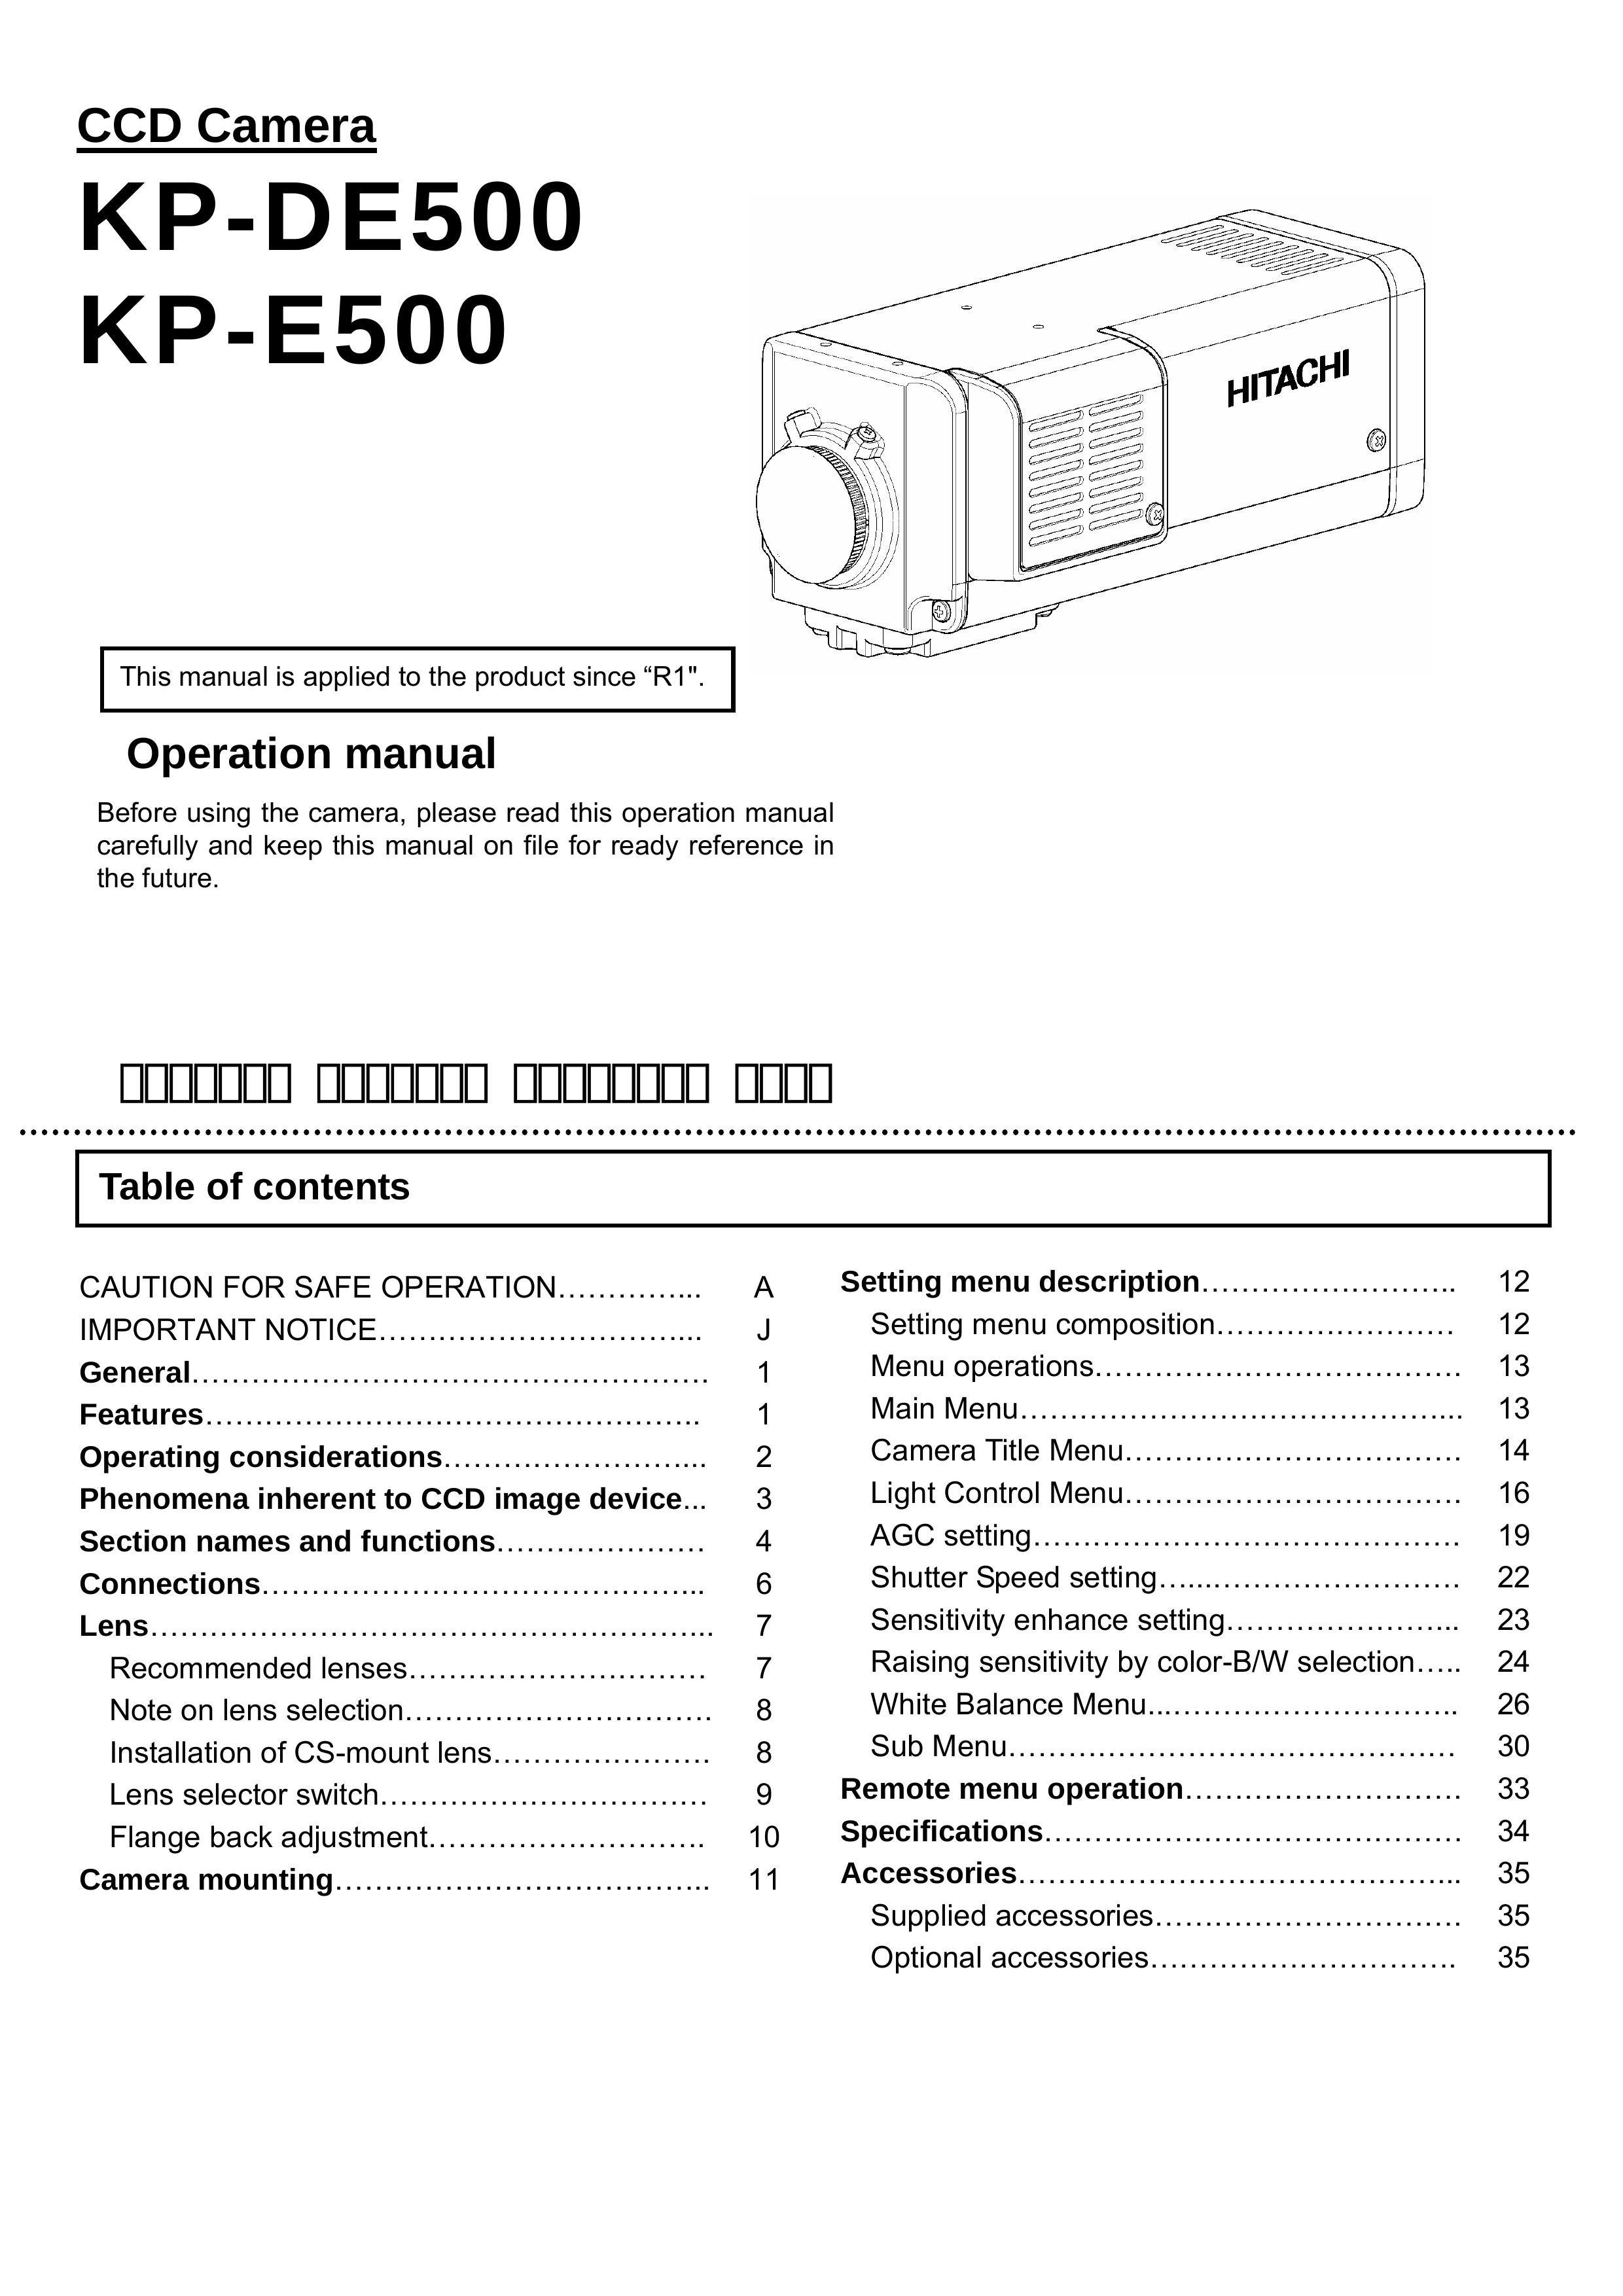 Hitachi KP-E500 Digital Camera User Manual